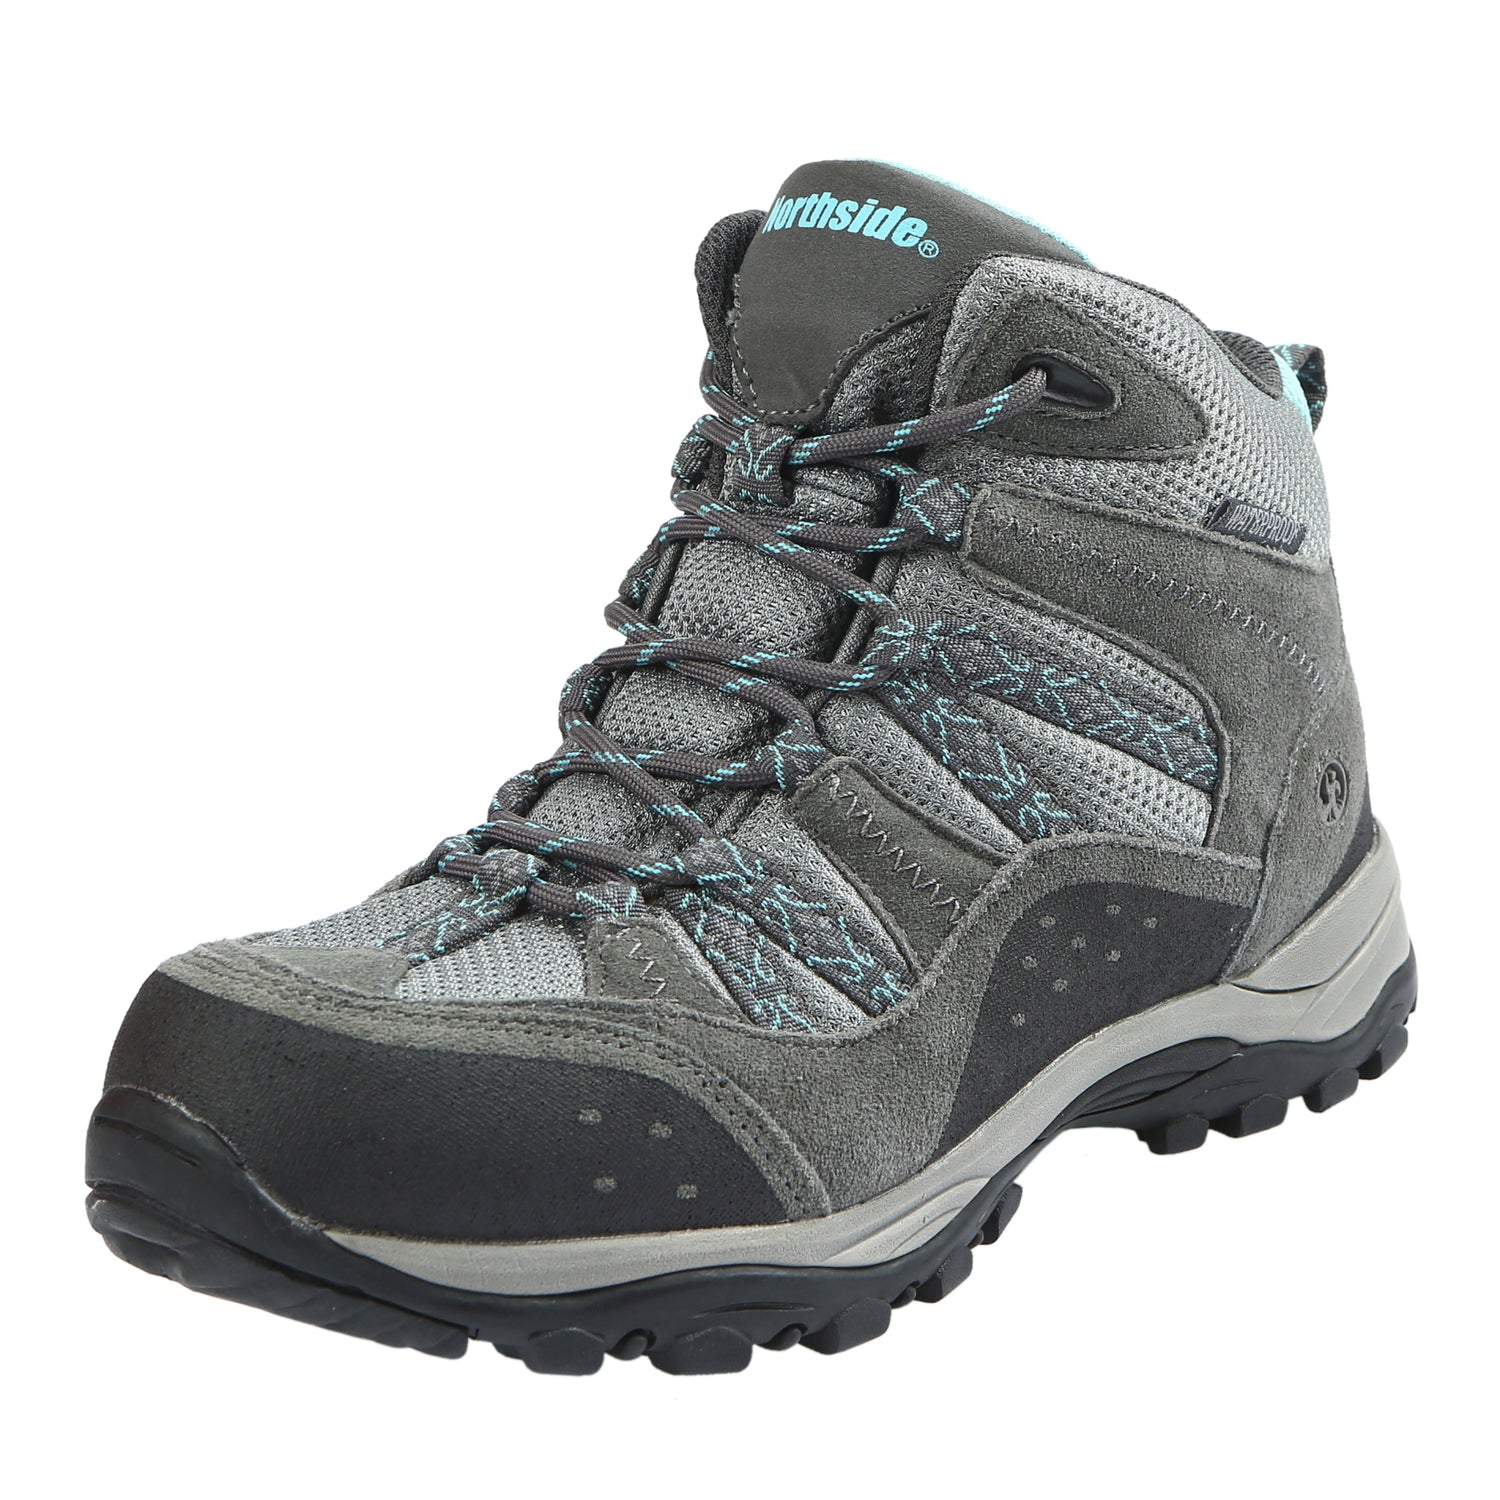 Northside Women's Freemont Mid Wide Waterproof Hiking Boots